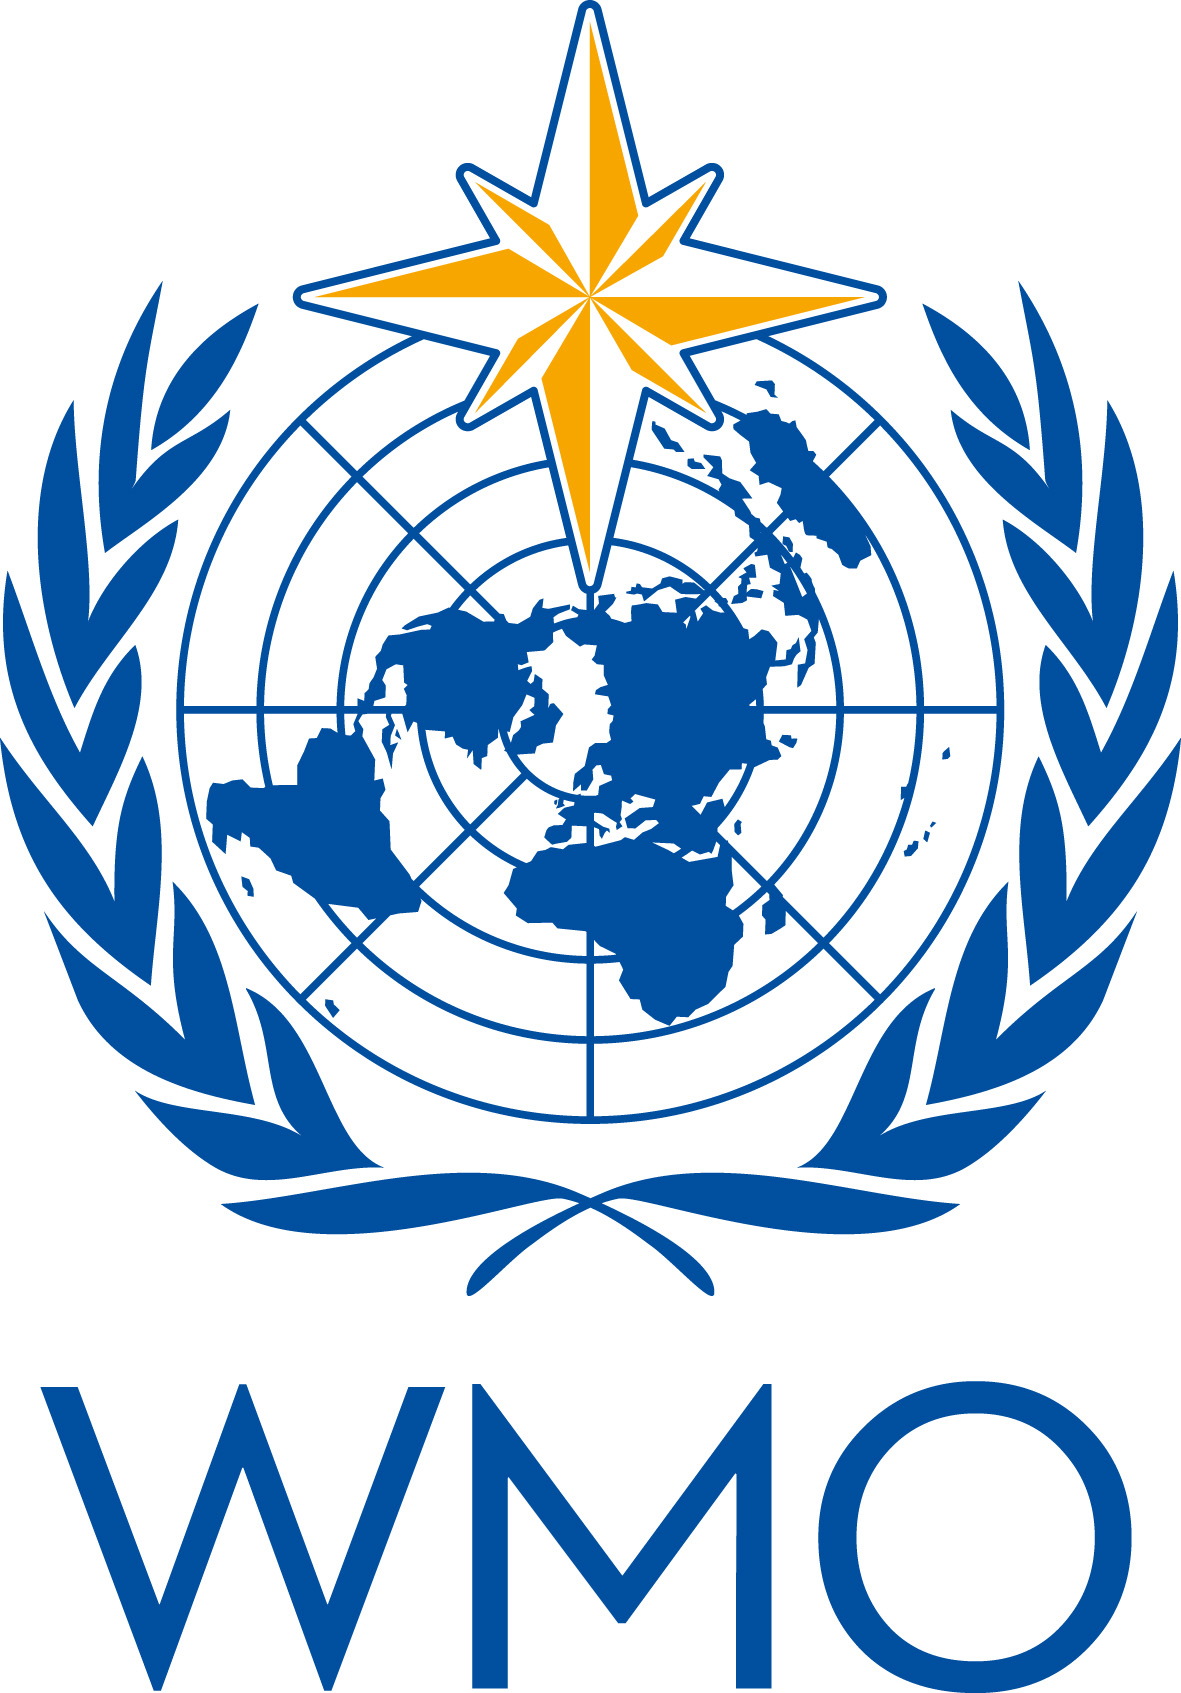 WMO - World Meteorological Organization - IMO - International Meteor Organization - Всемирная метеорологическая организация